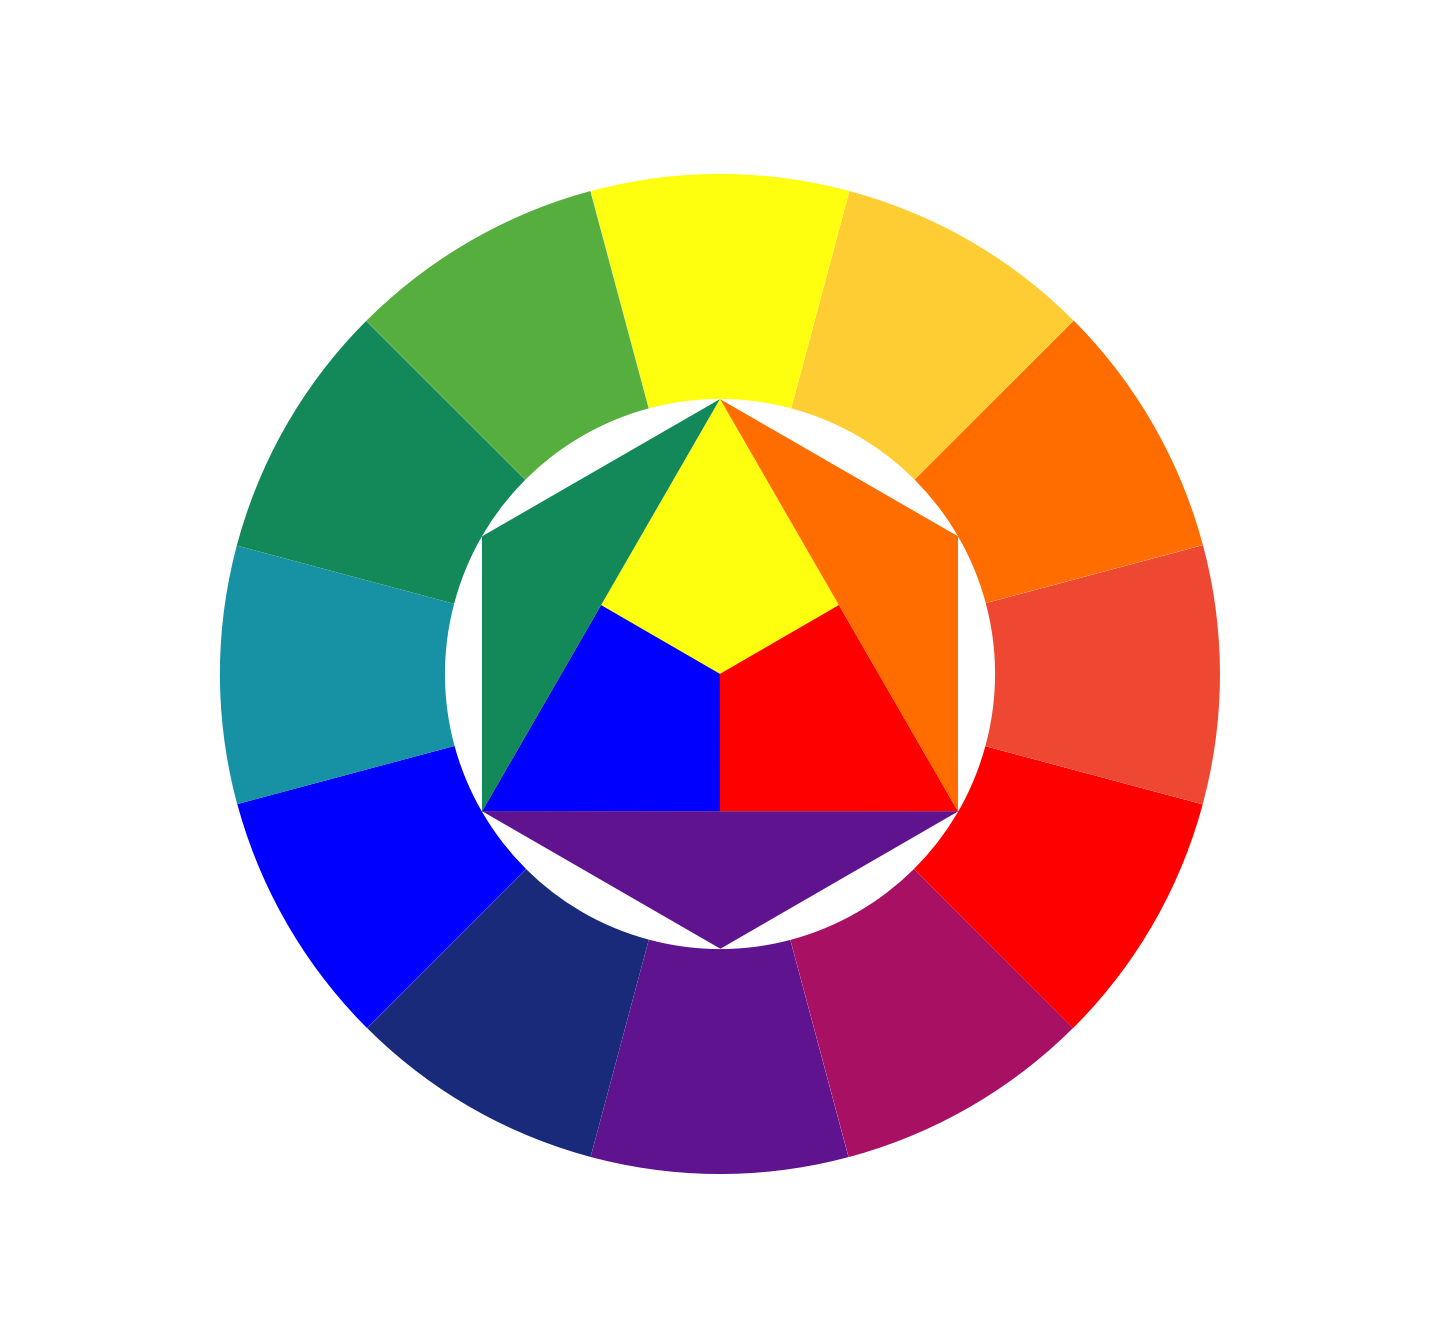 Круг Иоханнеса Иттена. Цветовой спектр Иттена. Иоганнес Иттен цветовой круг. Цветовой круг Иттена контрасты. Цвет round